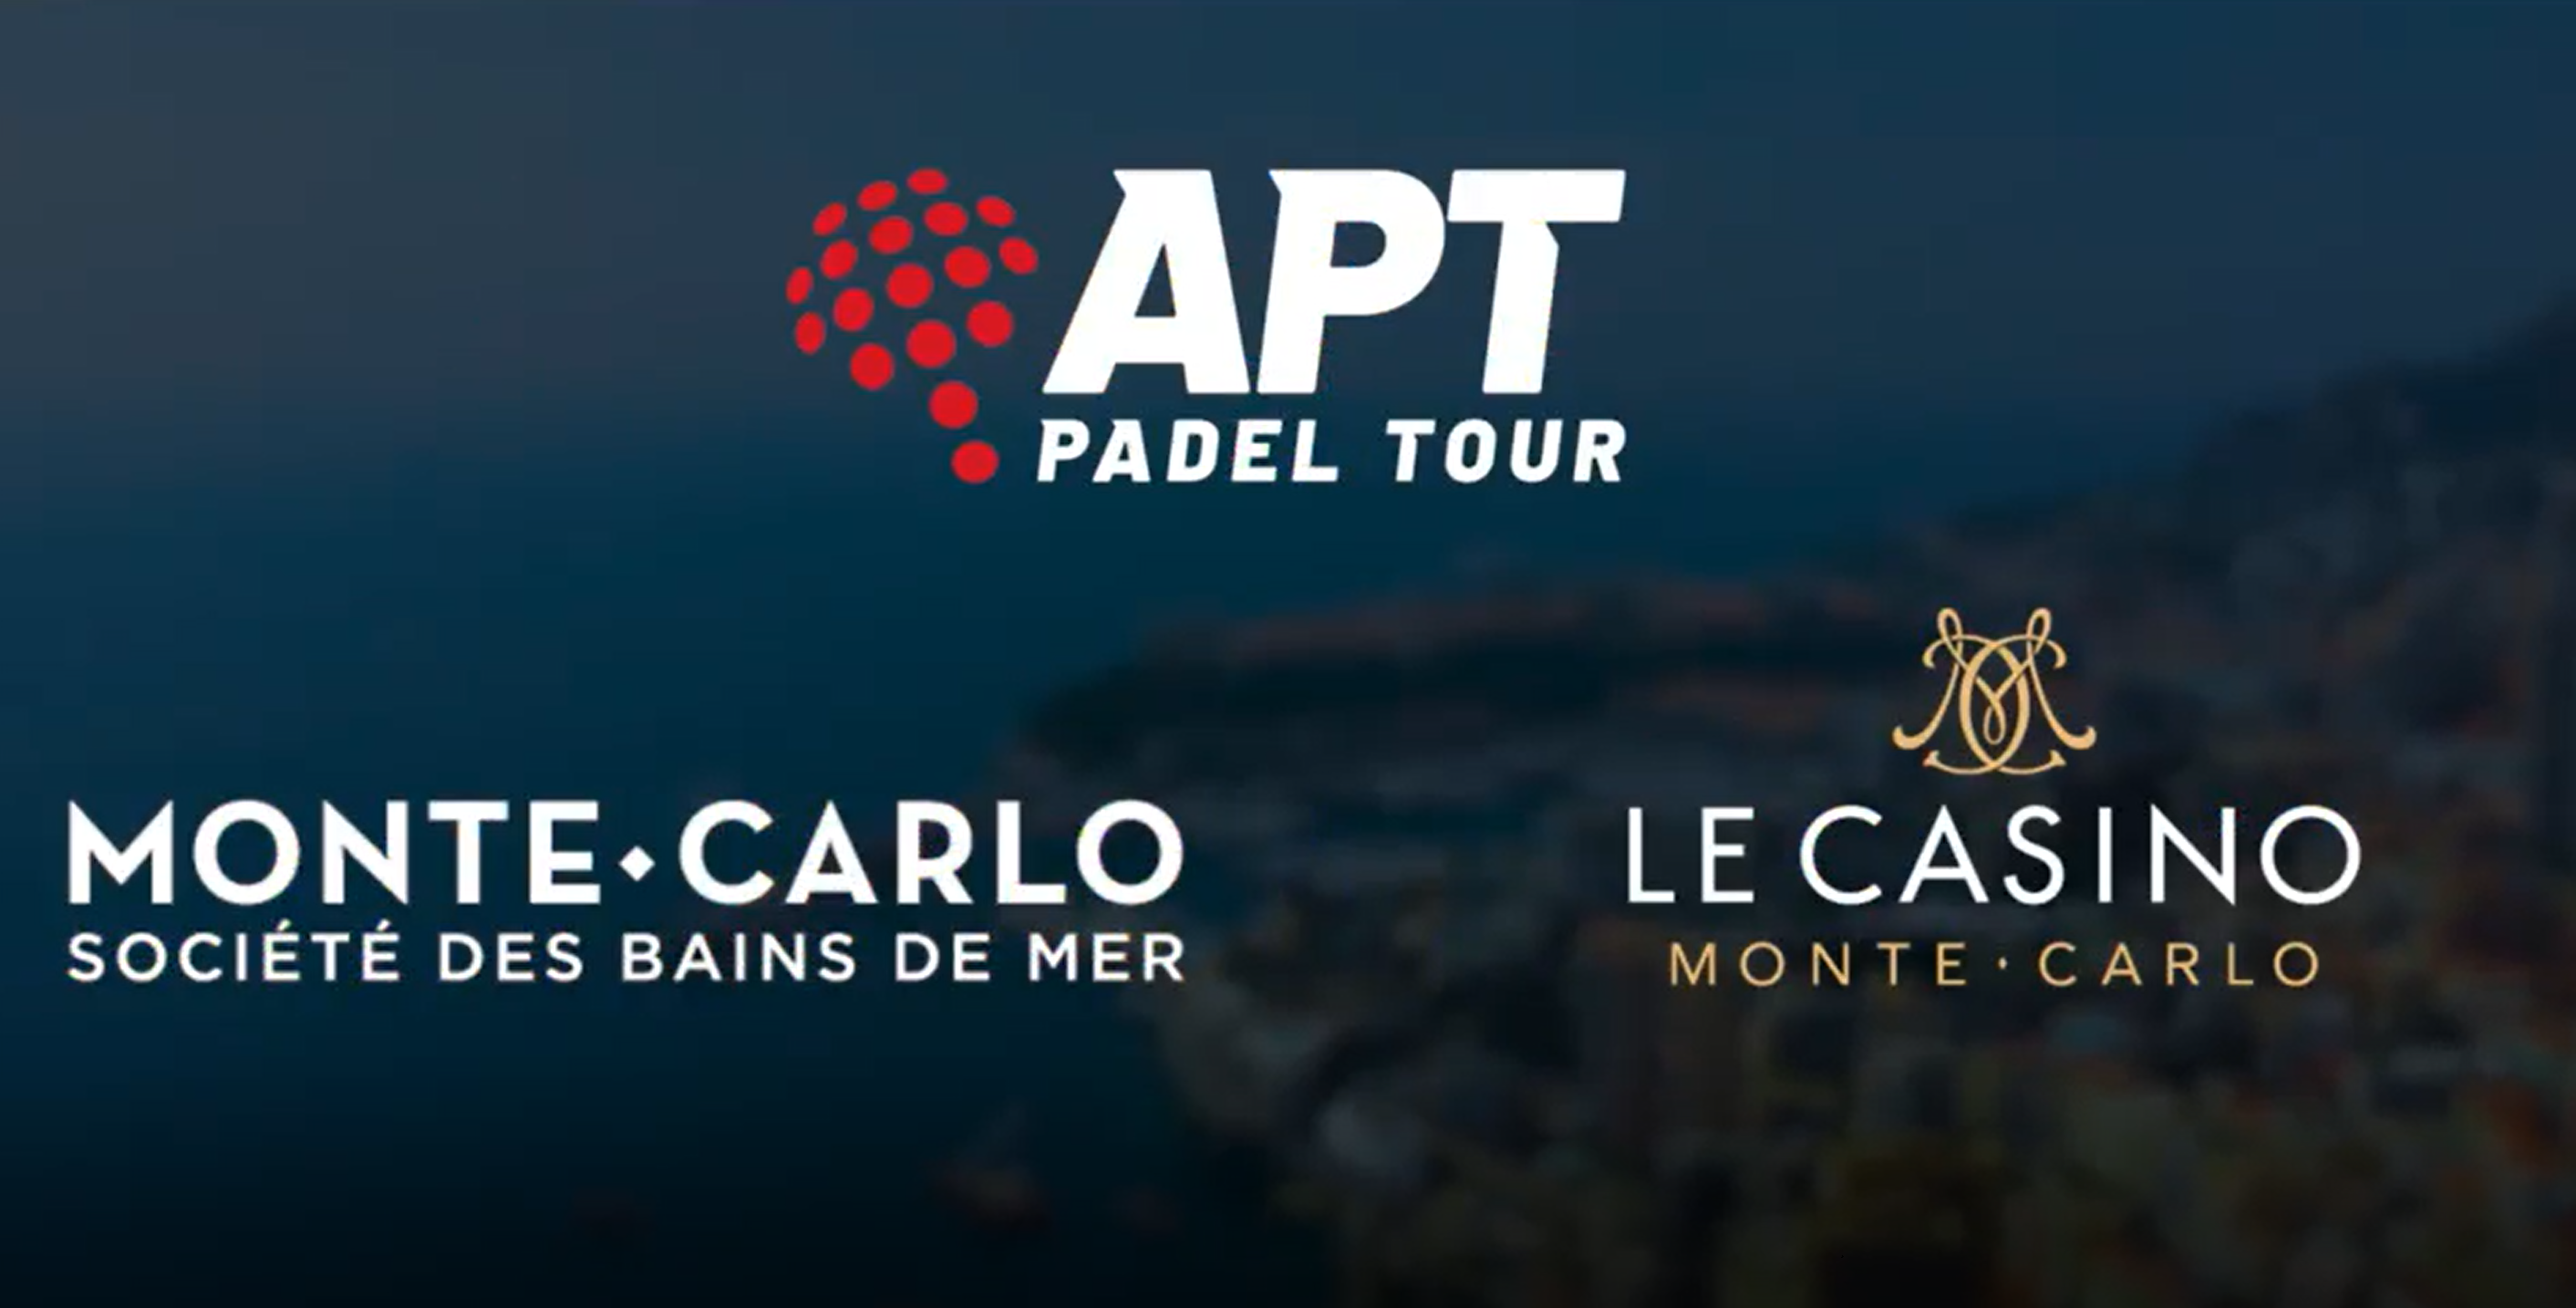 APT Padel 游览摩纳哥：天气会很热！